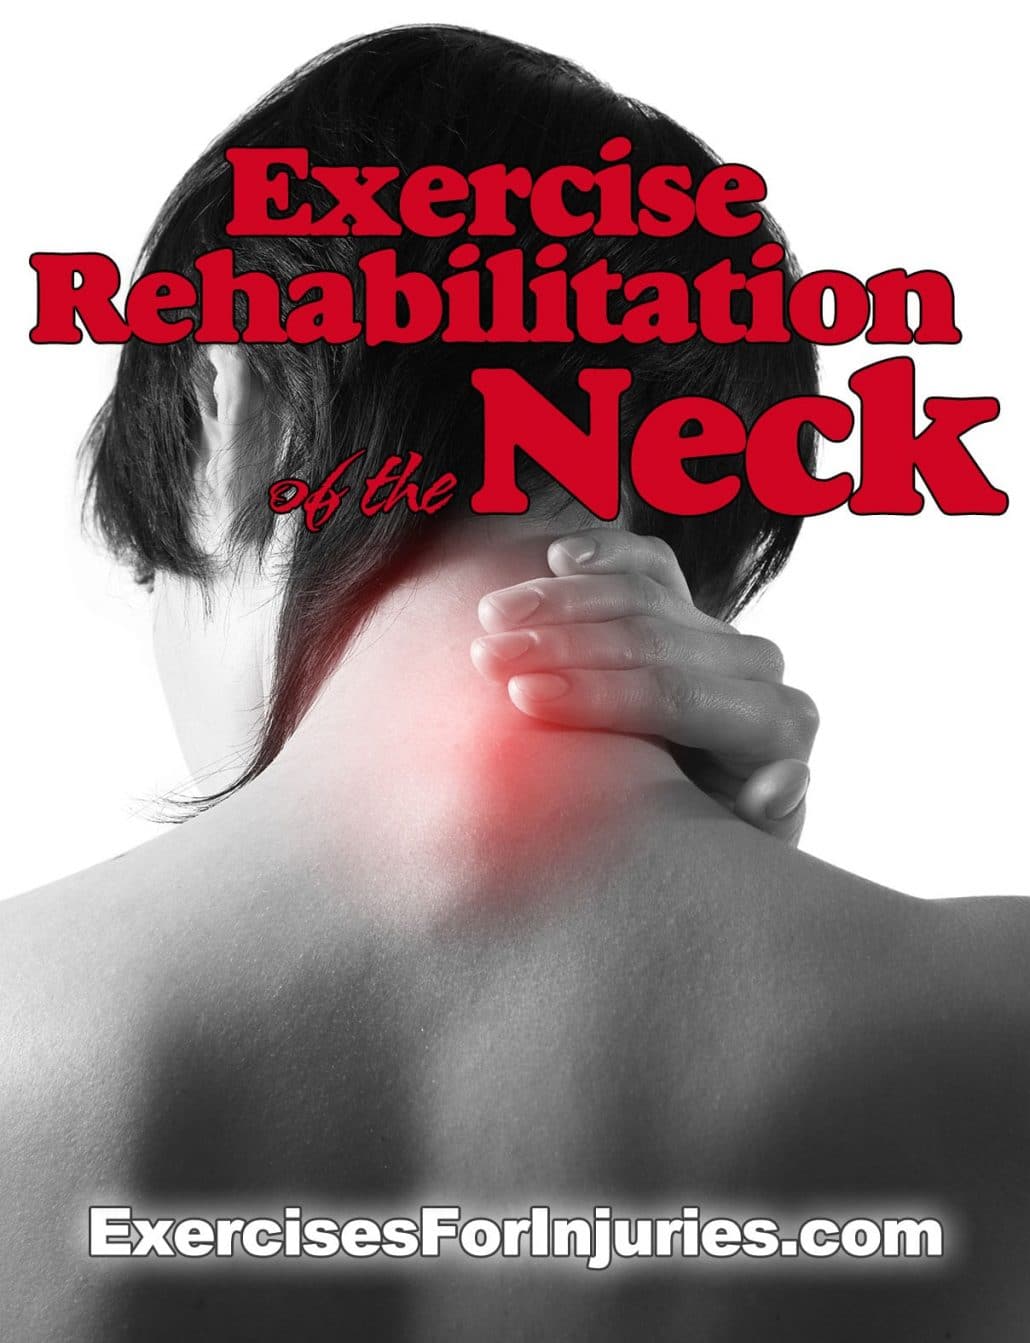 Exercise Rehabilitation of the Neck with Rick Kaselj